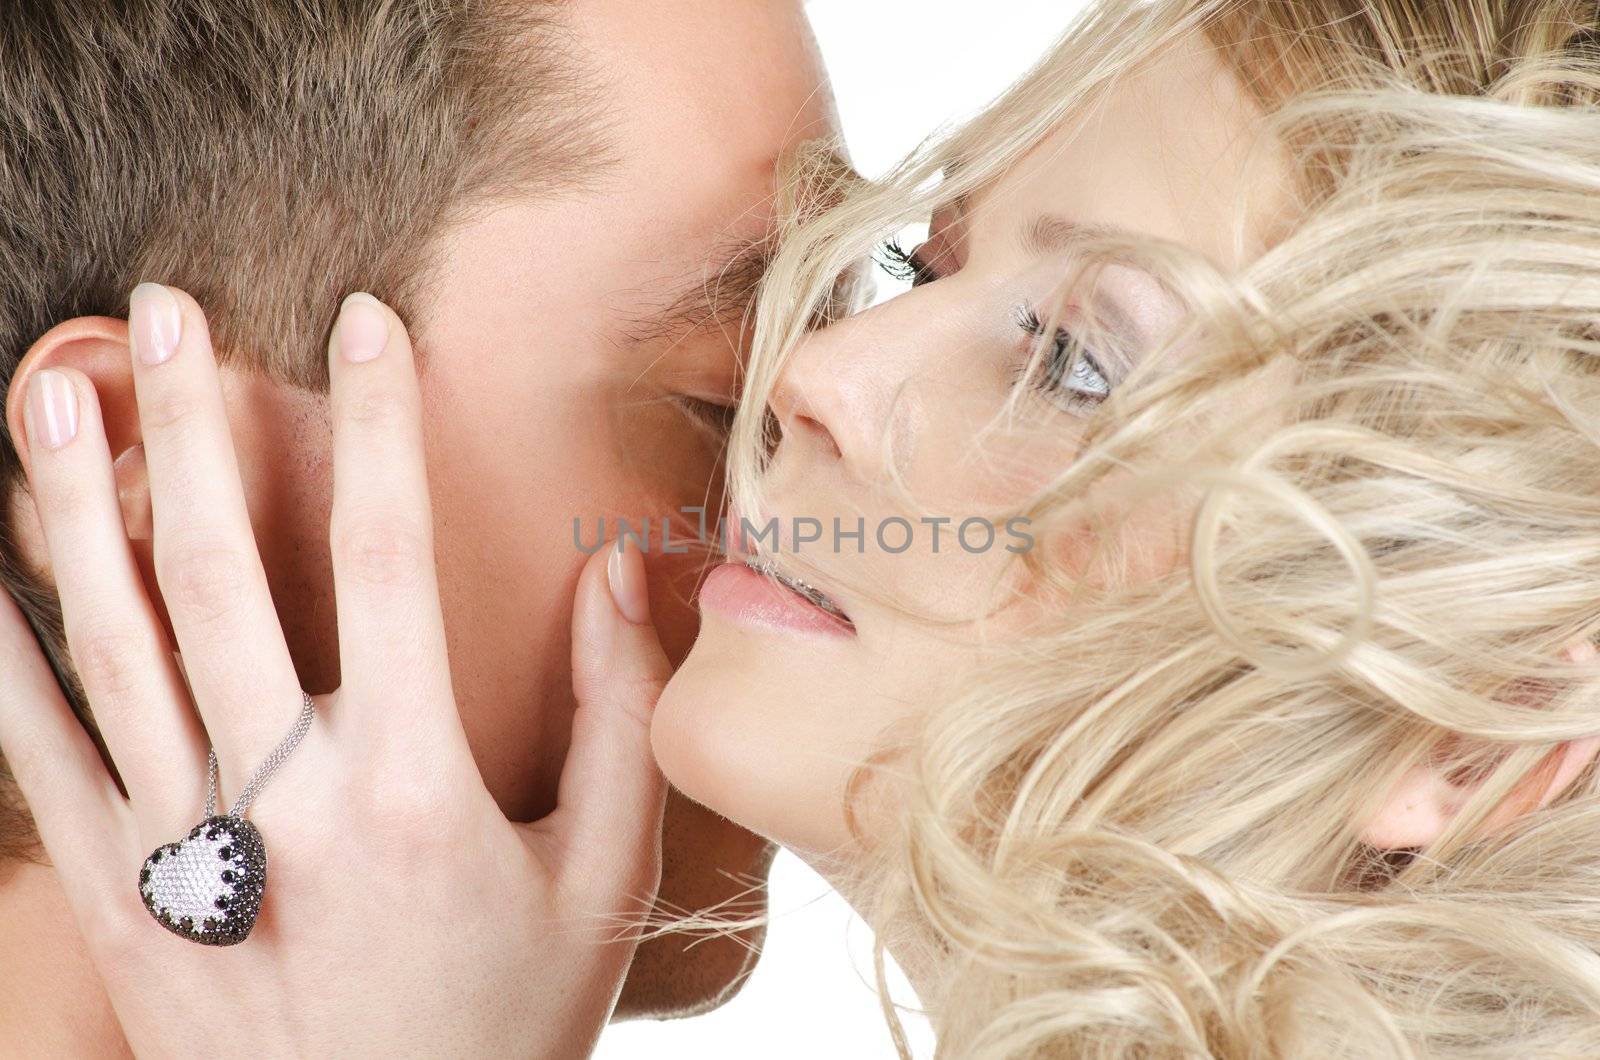 Beauty man and woman - lovers closeup portraits